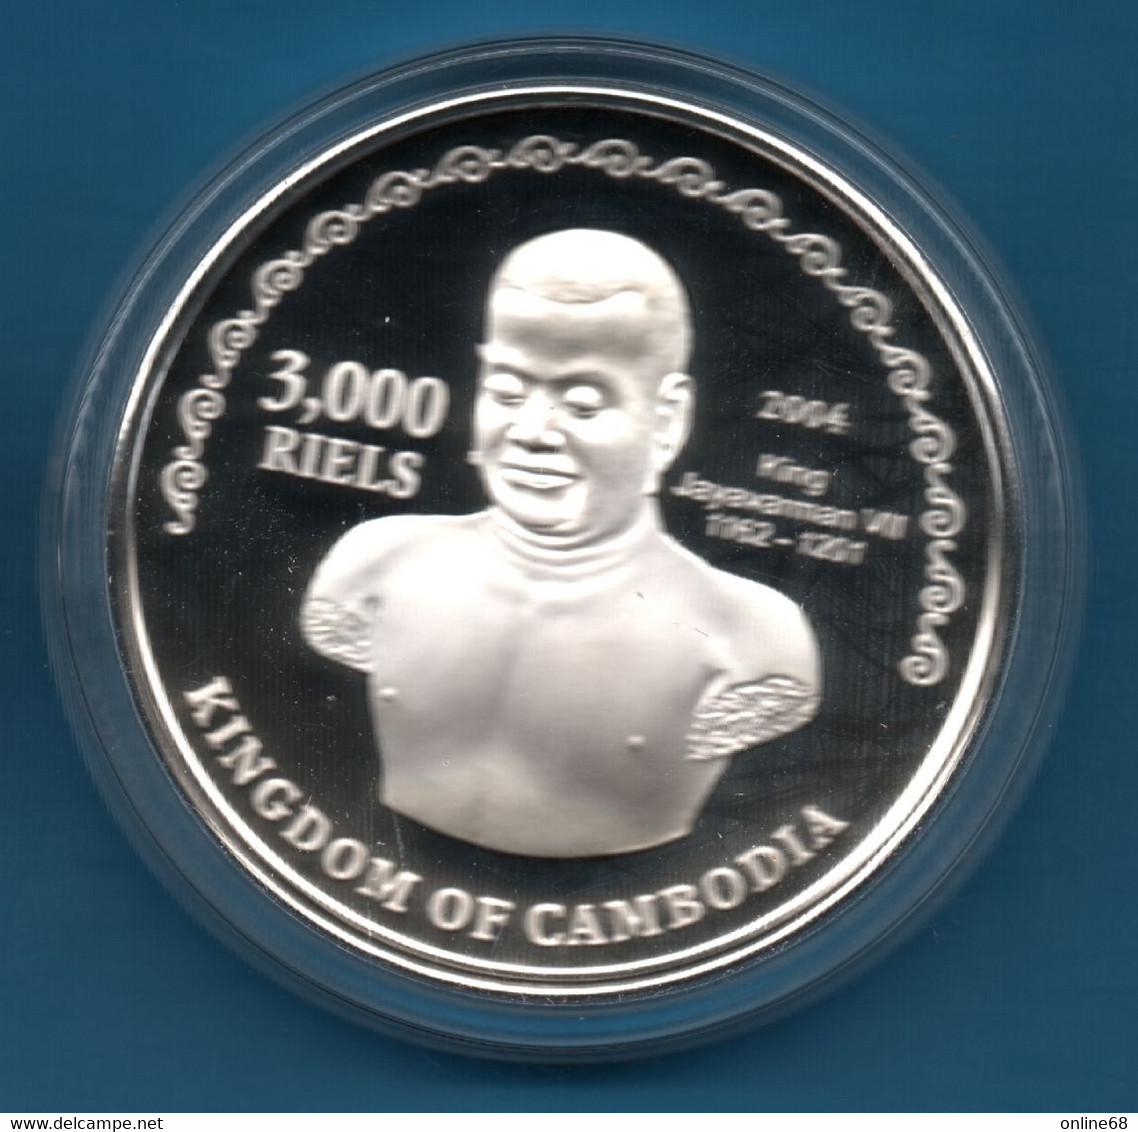 CAMBODIA 3000 RIELS 2004 KM# 139 Silver .999 Argent 2006 FOOTBALL World Cup KING JAYAVAIMAN VII - Kambodscha